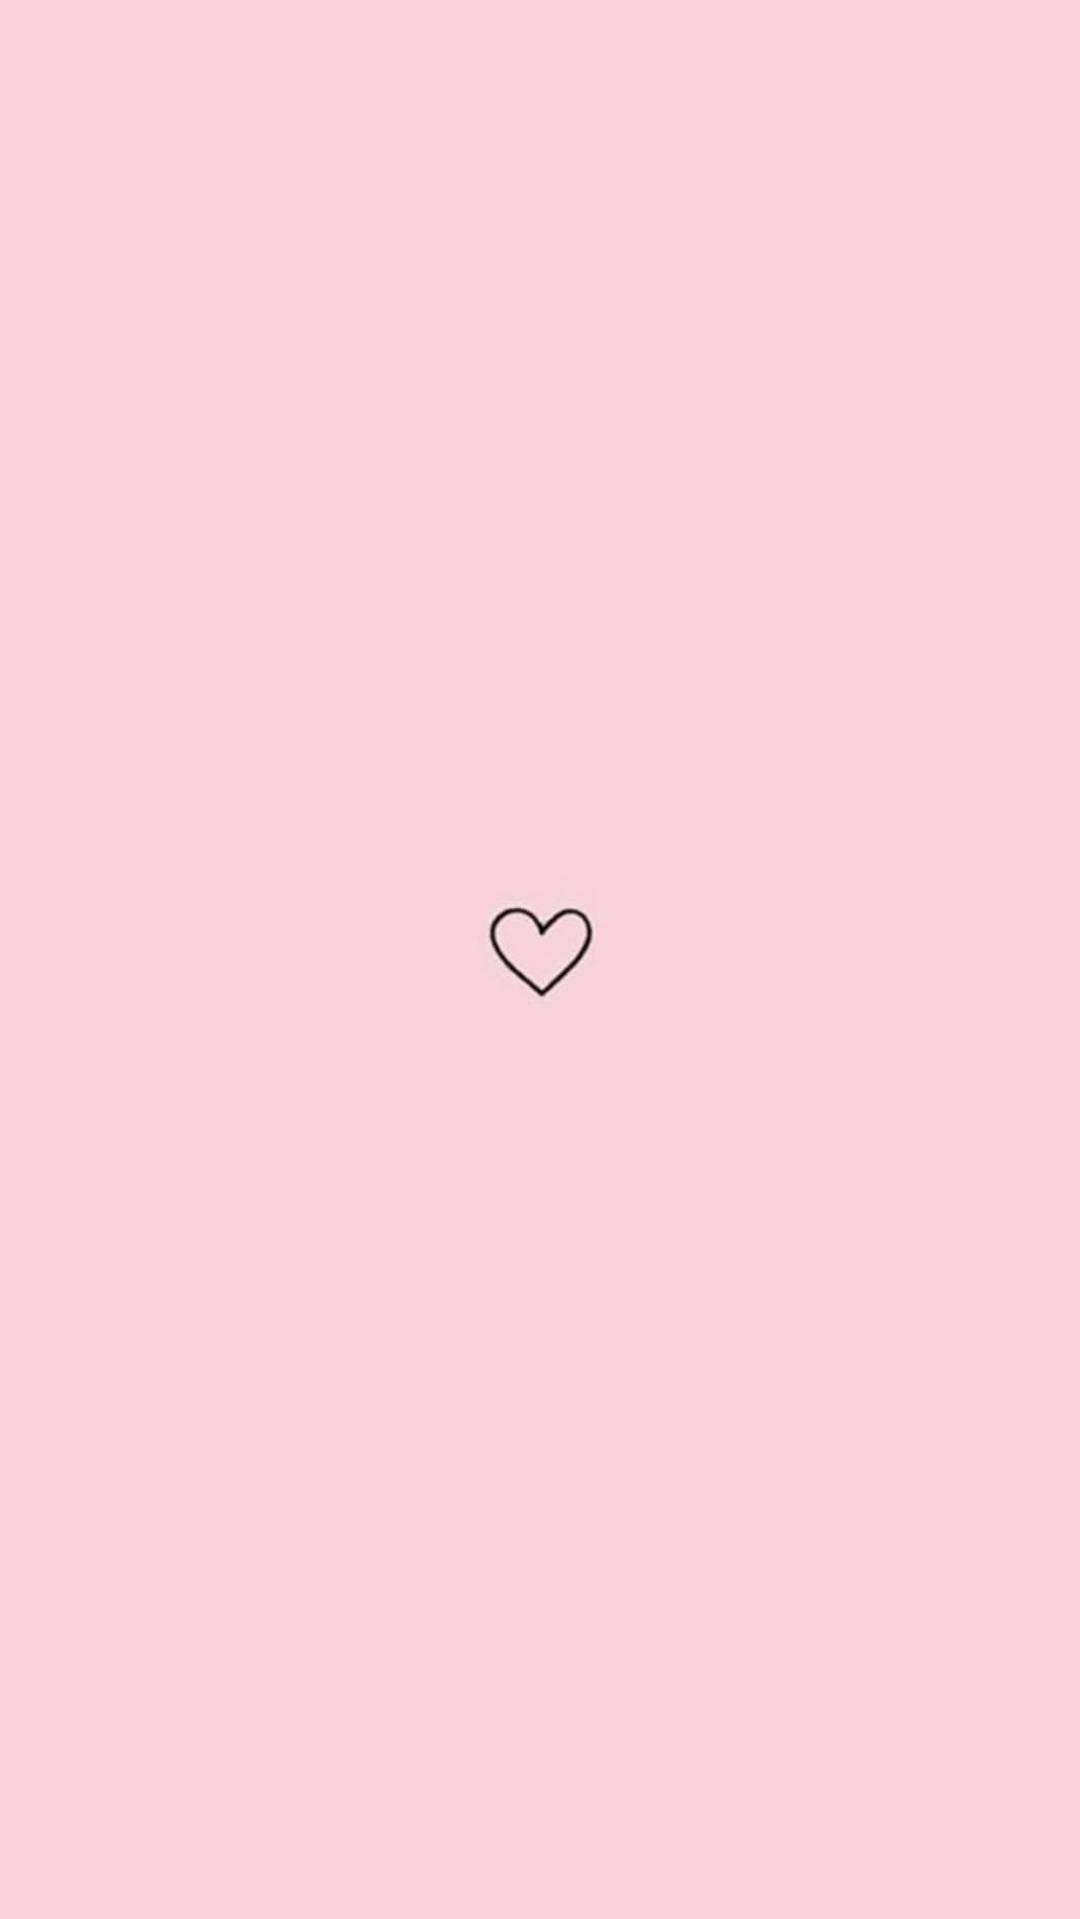 Simple Pink Aesthetic Heart Wallpaper